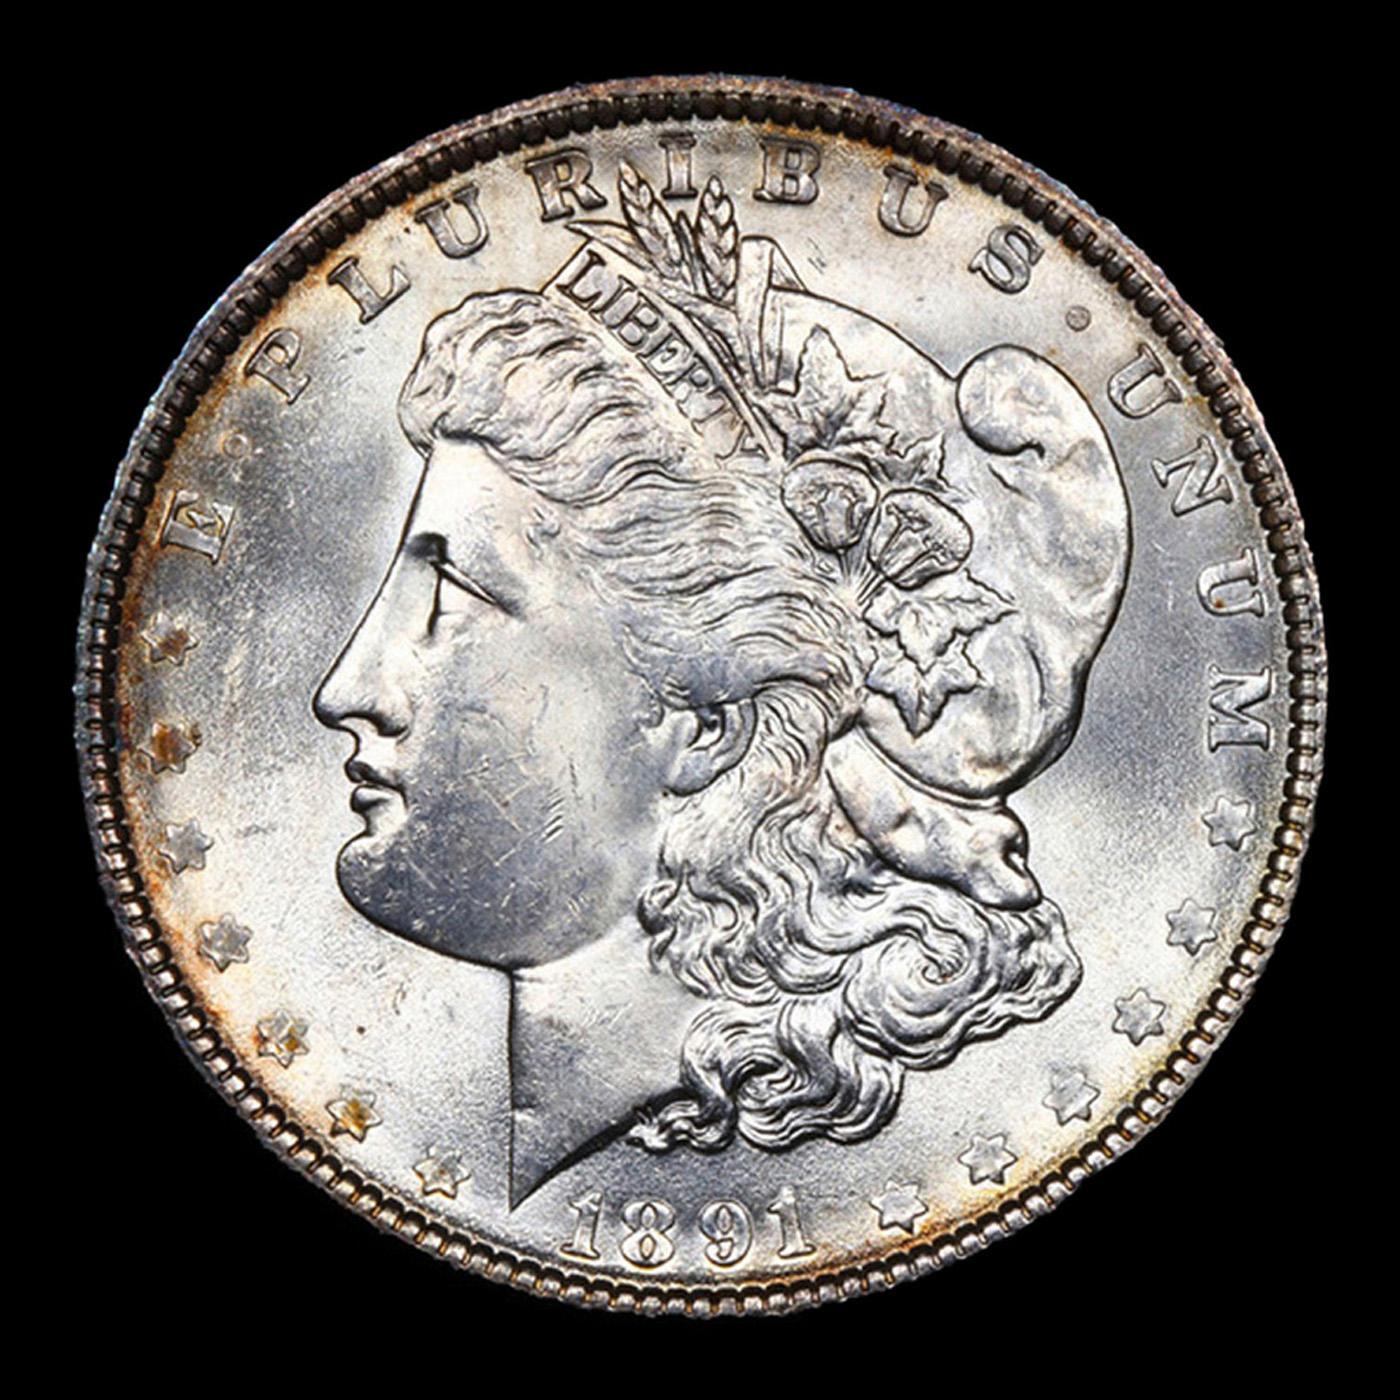 1891-p Morgan Dollar 1 Grades Choice Unc by SEGS